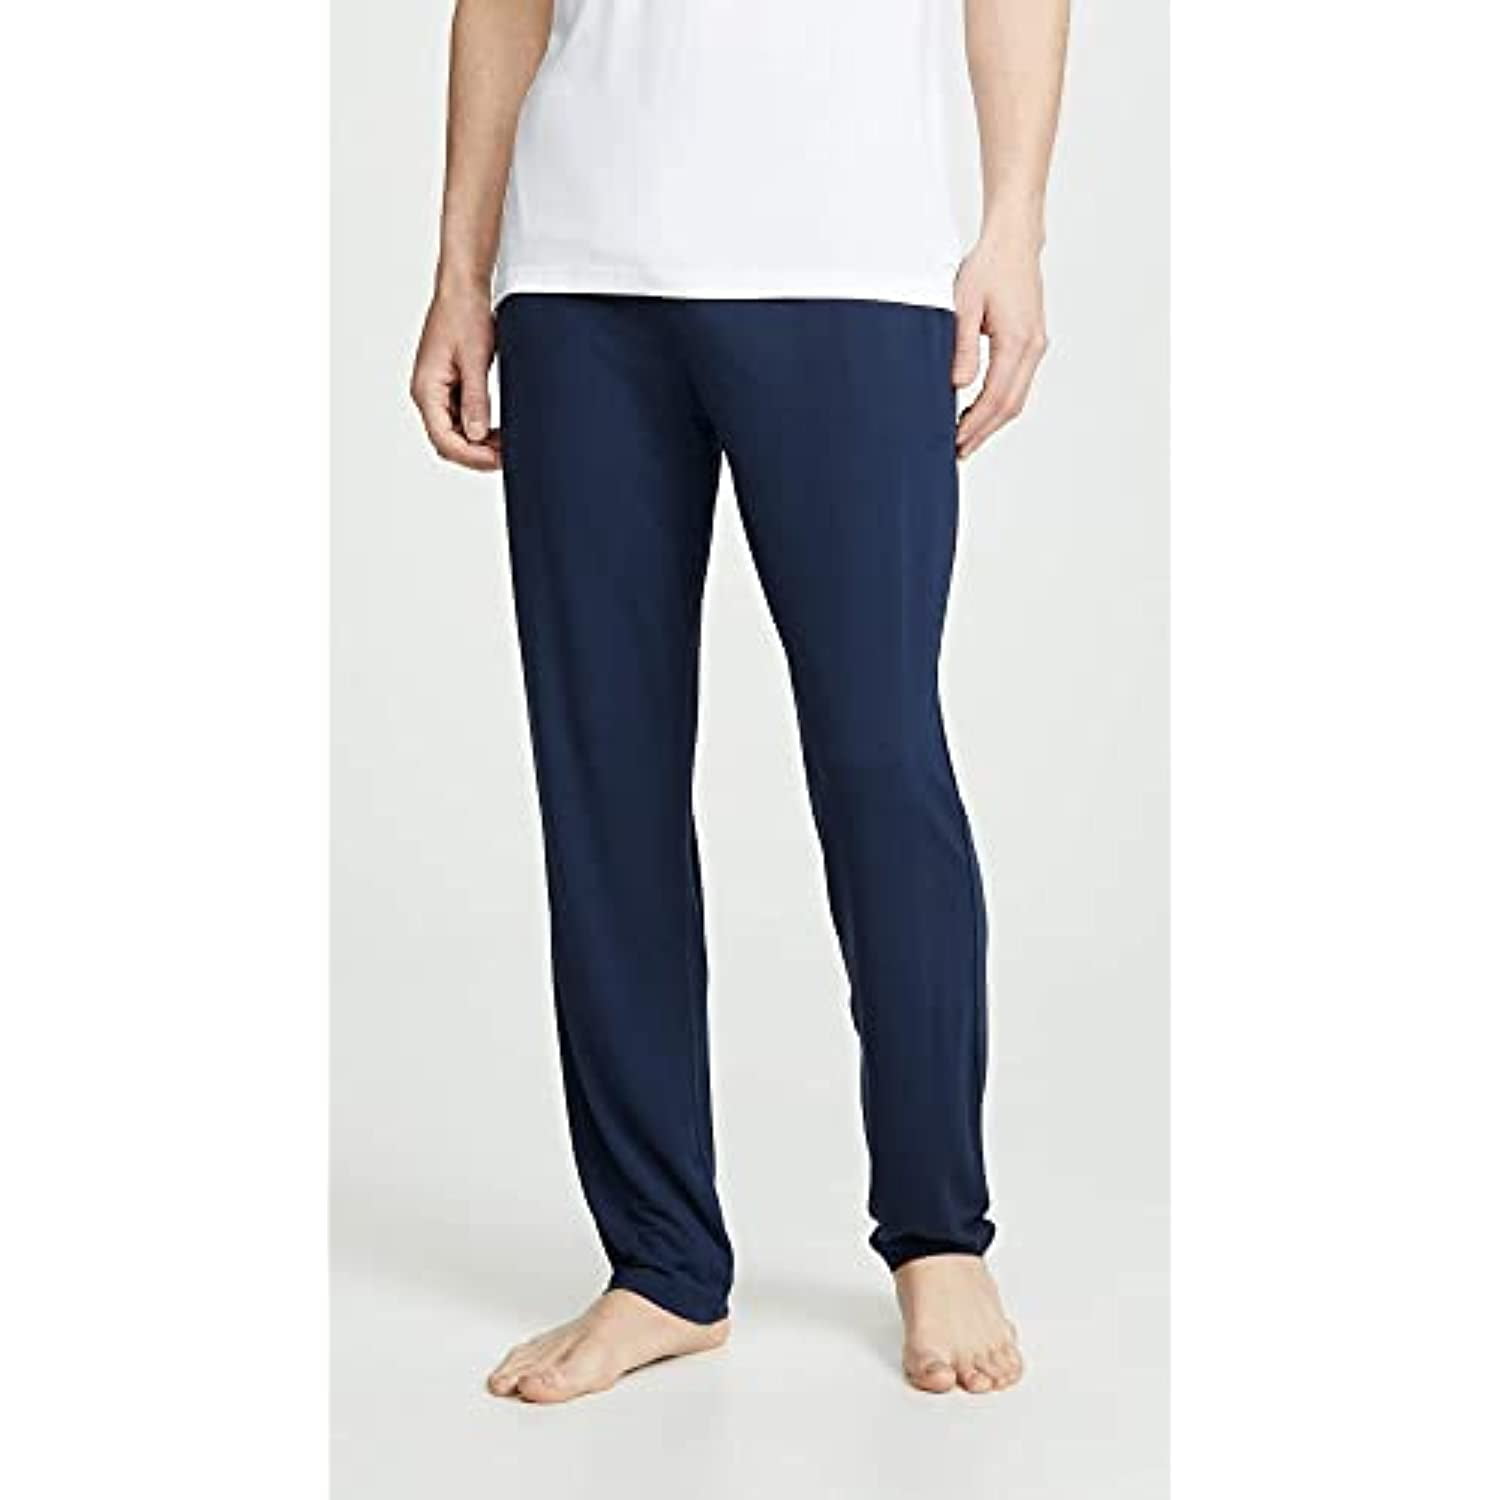 Ultra Shadow Calvin Klein Modal Blue Underwear Pants Soft Sleep